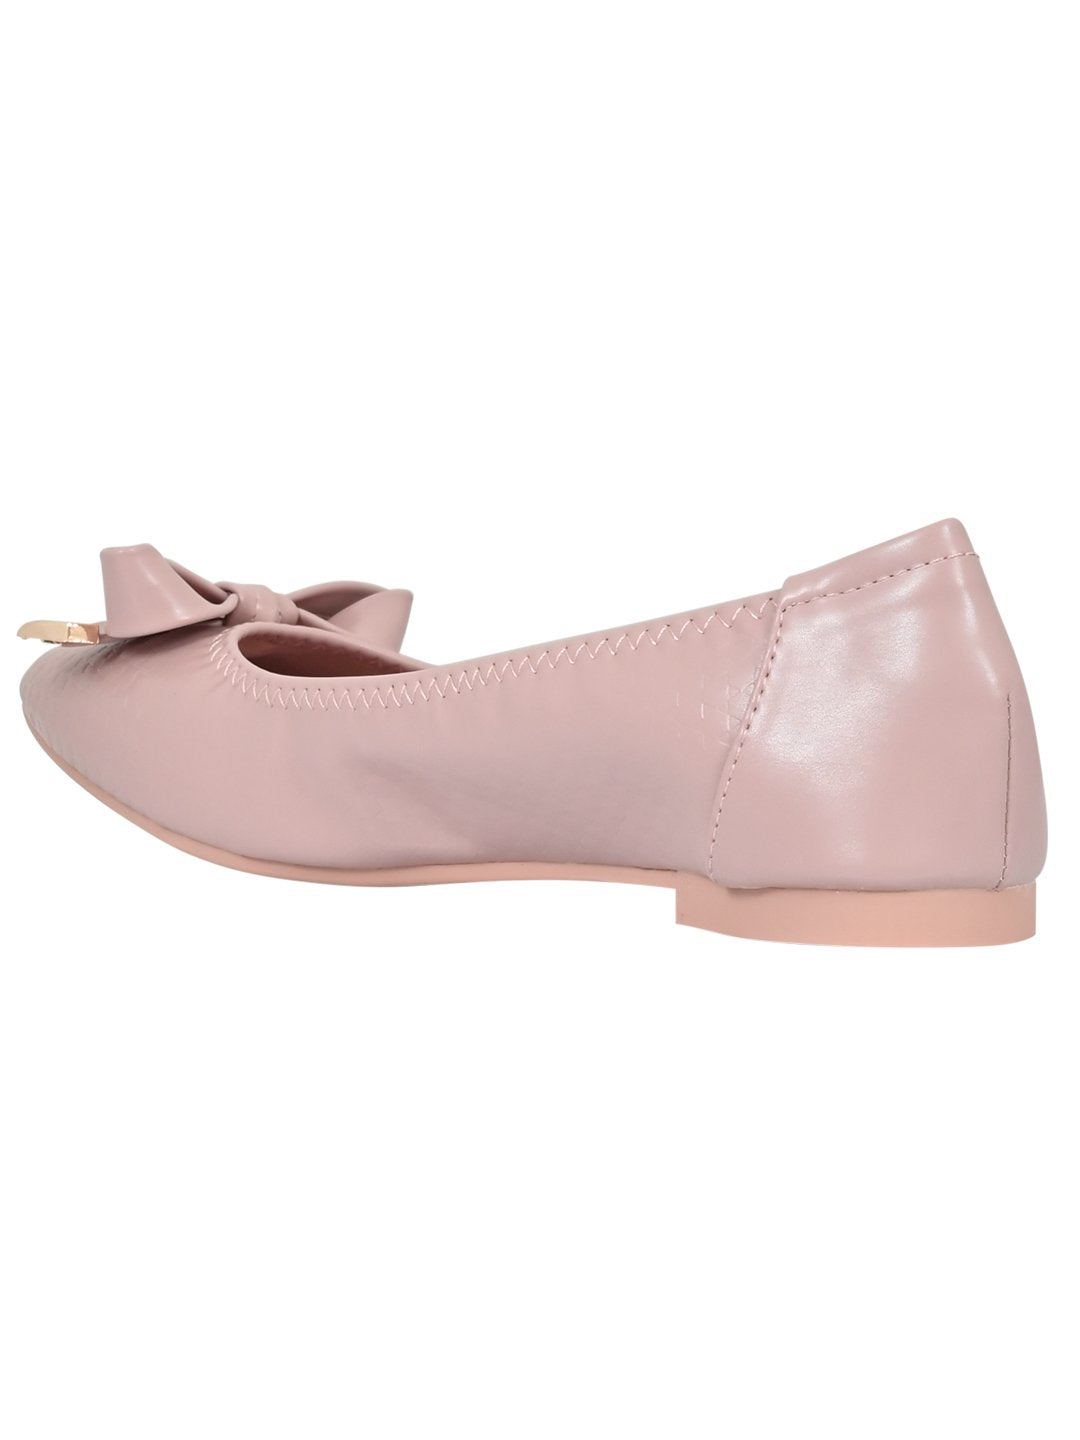 Women Footwear, Pink Ballerinas, Footwear